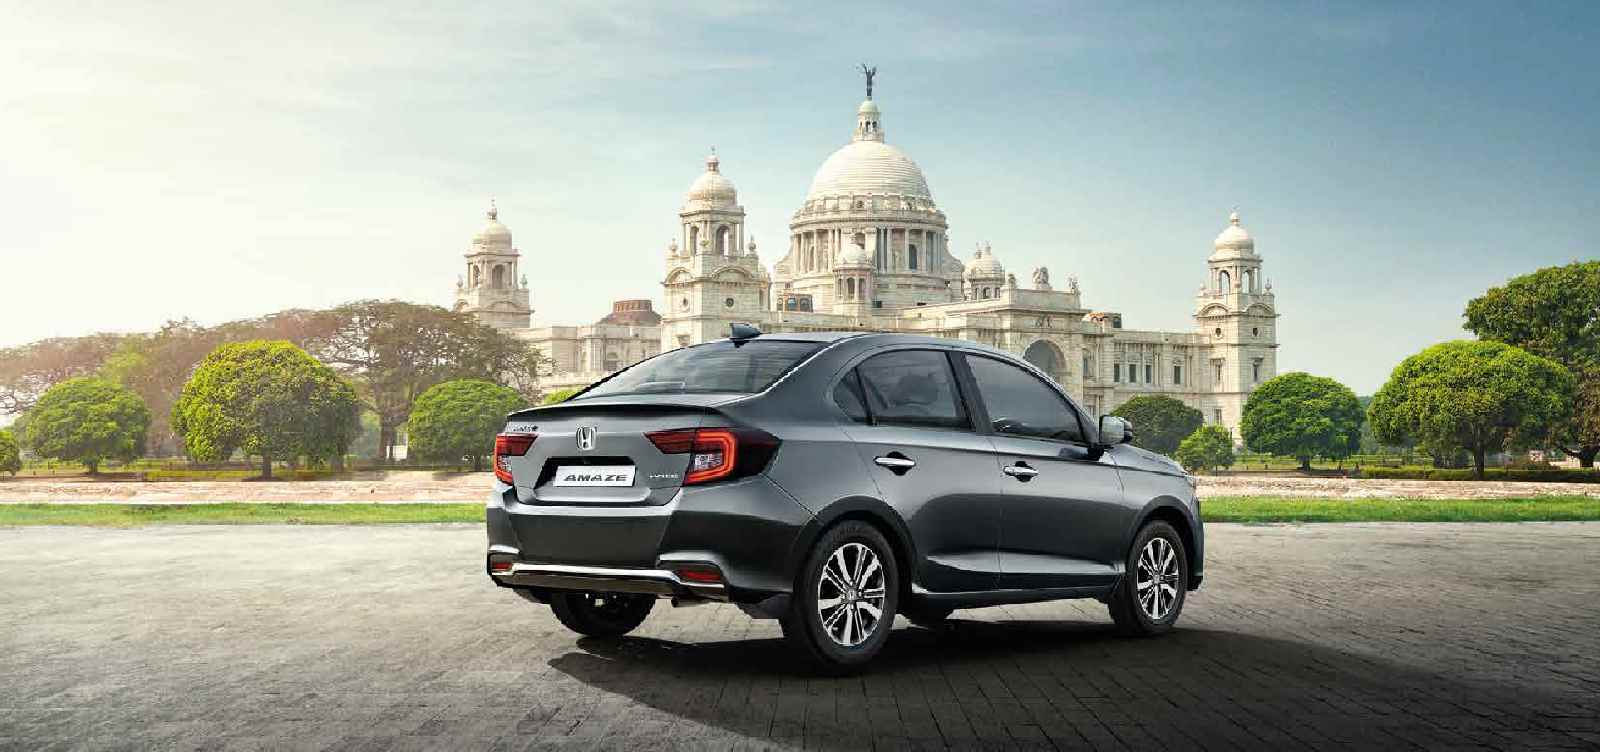 New Honda Amaze Price in Chennai